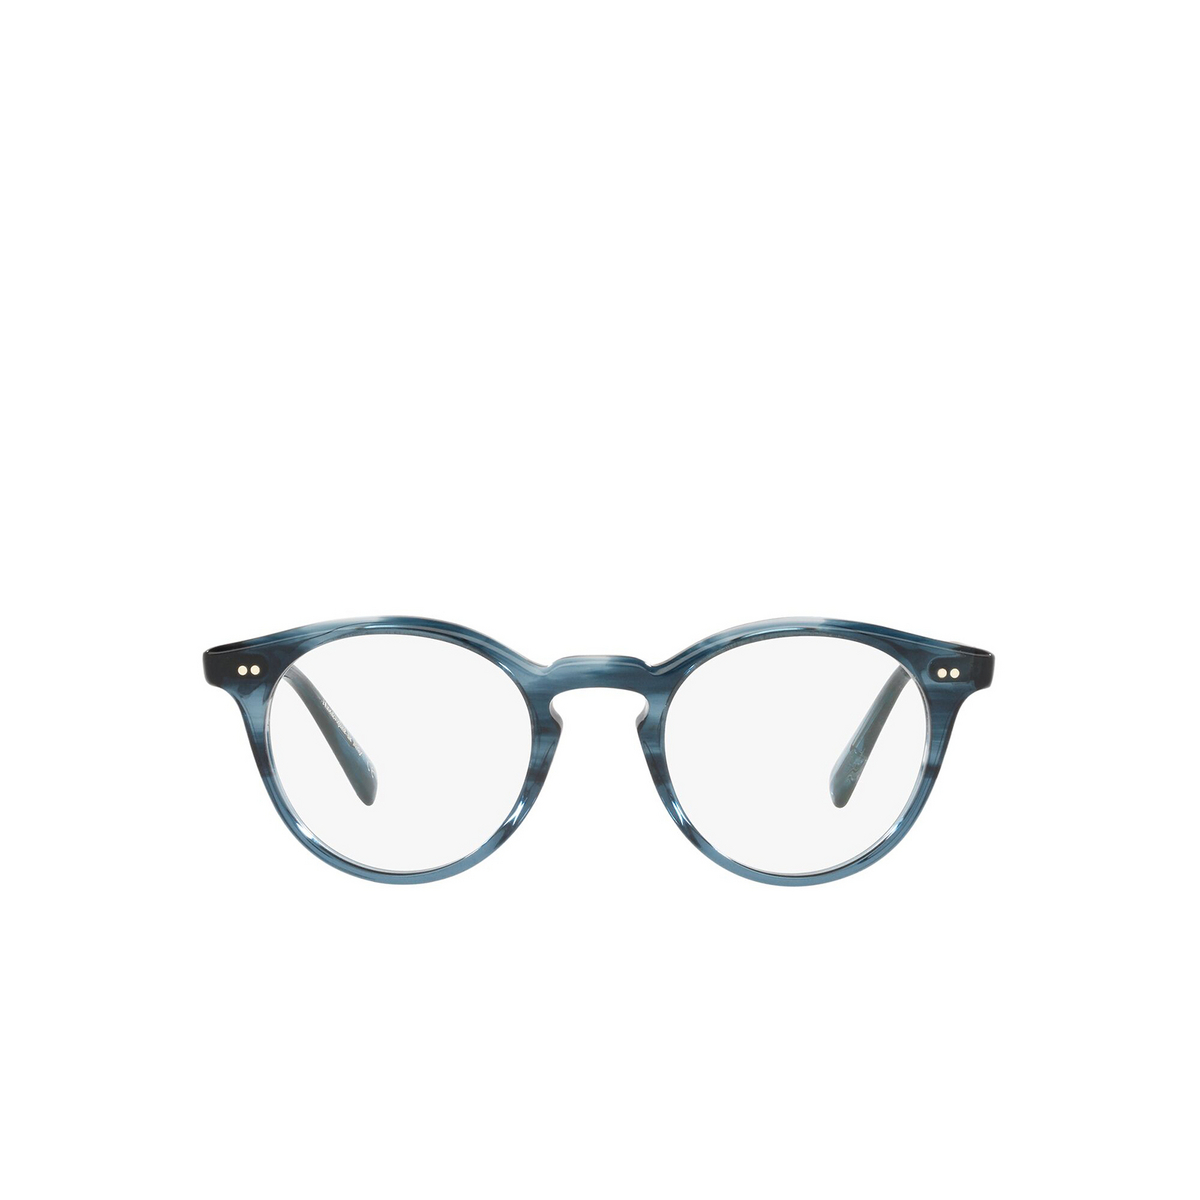 Oliver Peoples® Round Eyeglasses: Romare OV5459U color Dark Blue Vsb 1730 - front view.